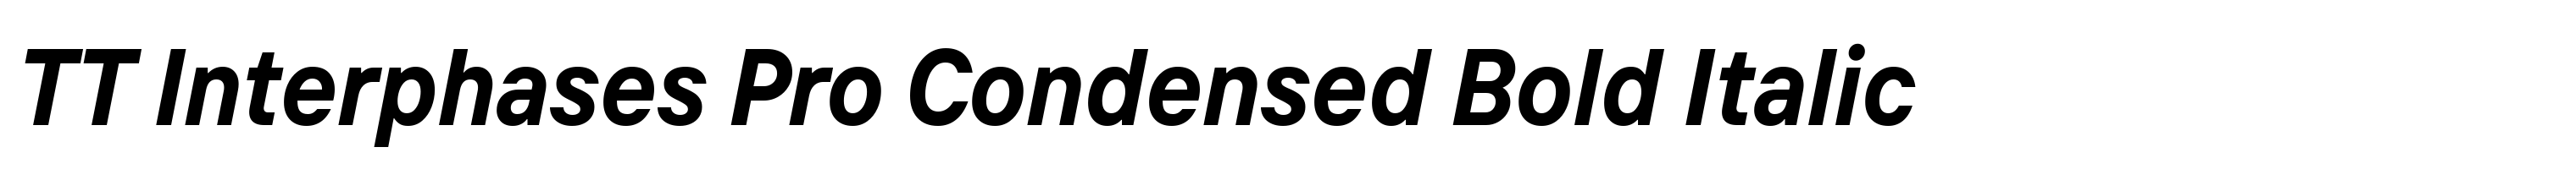 TT Interphases Pro Condensed Bold Italic